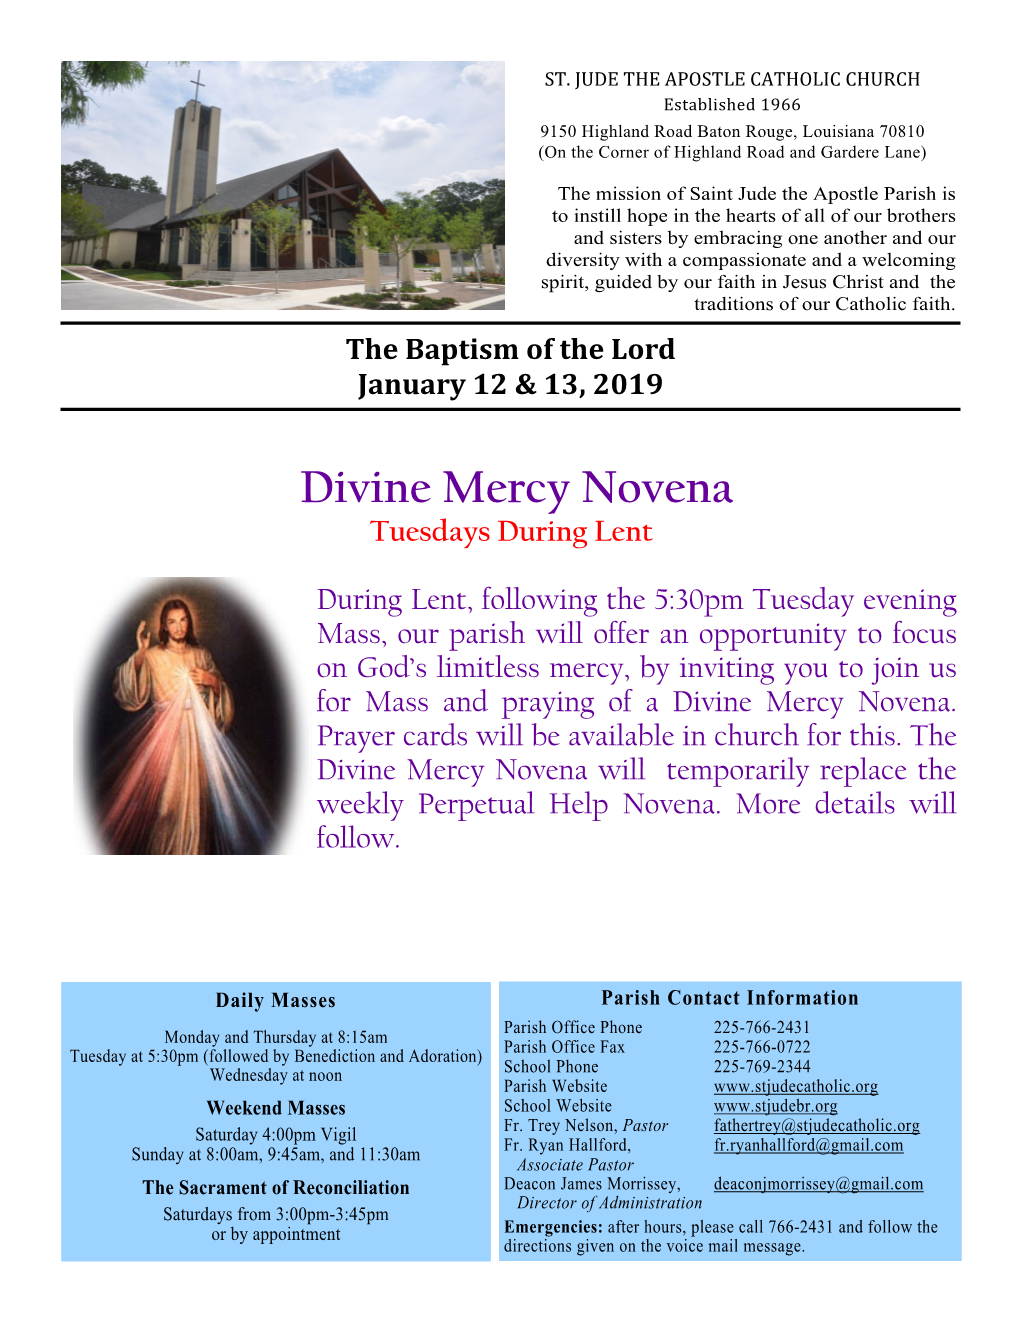 Divine Mercy Novena Tuesdays During Lent